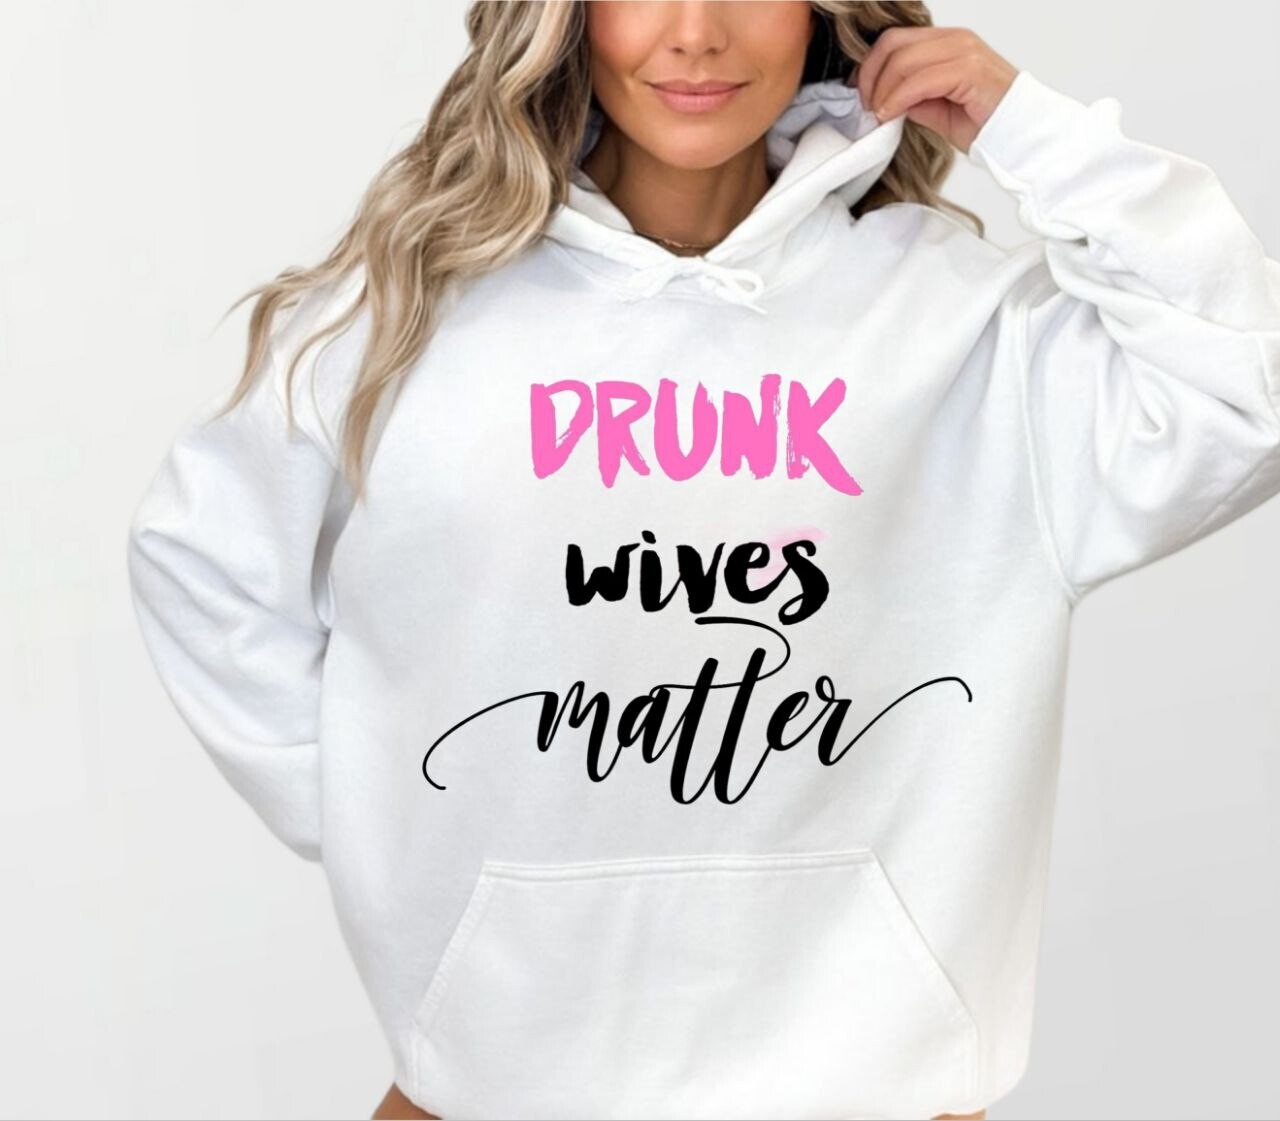 Drunk wives matter_Women's Elite Hoodie white